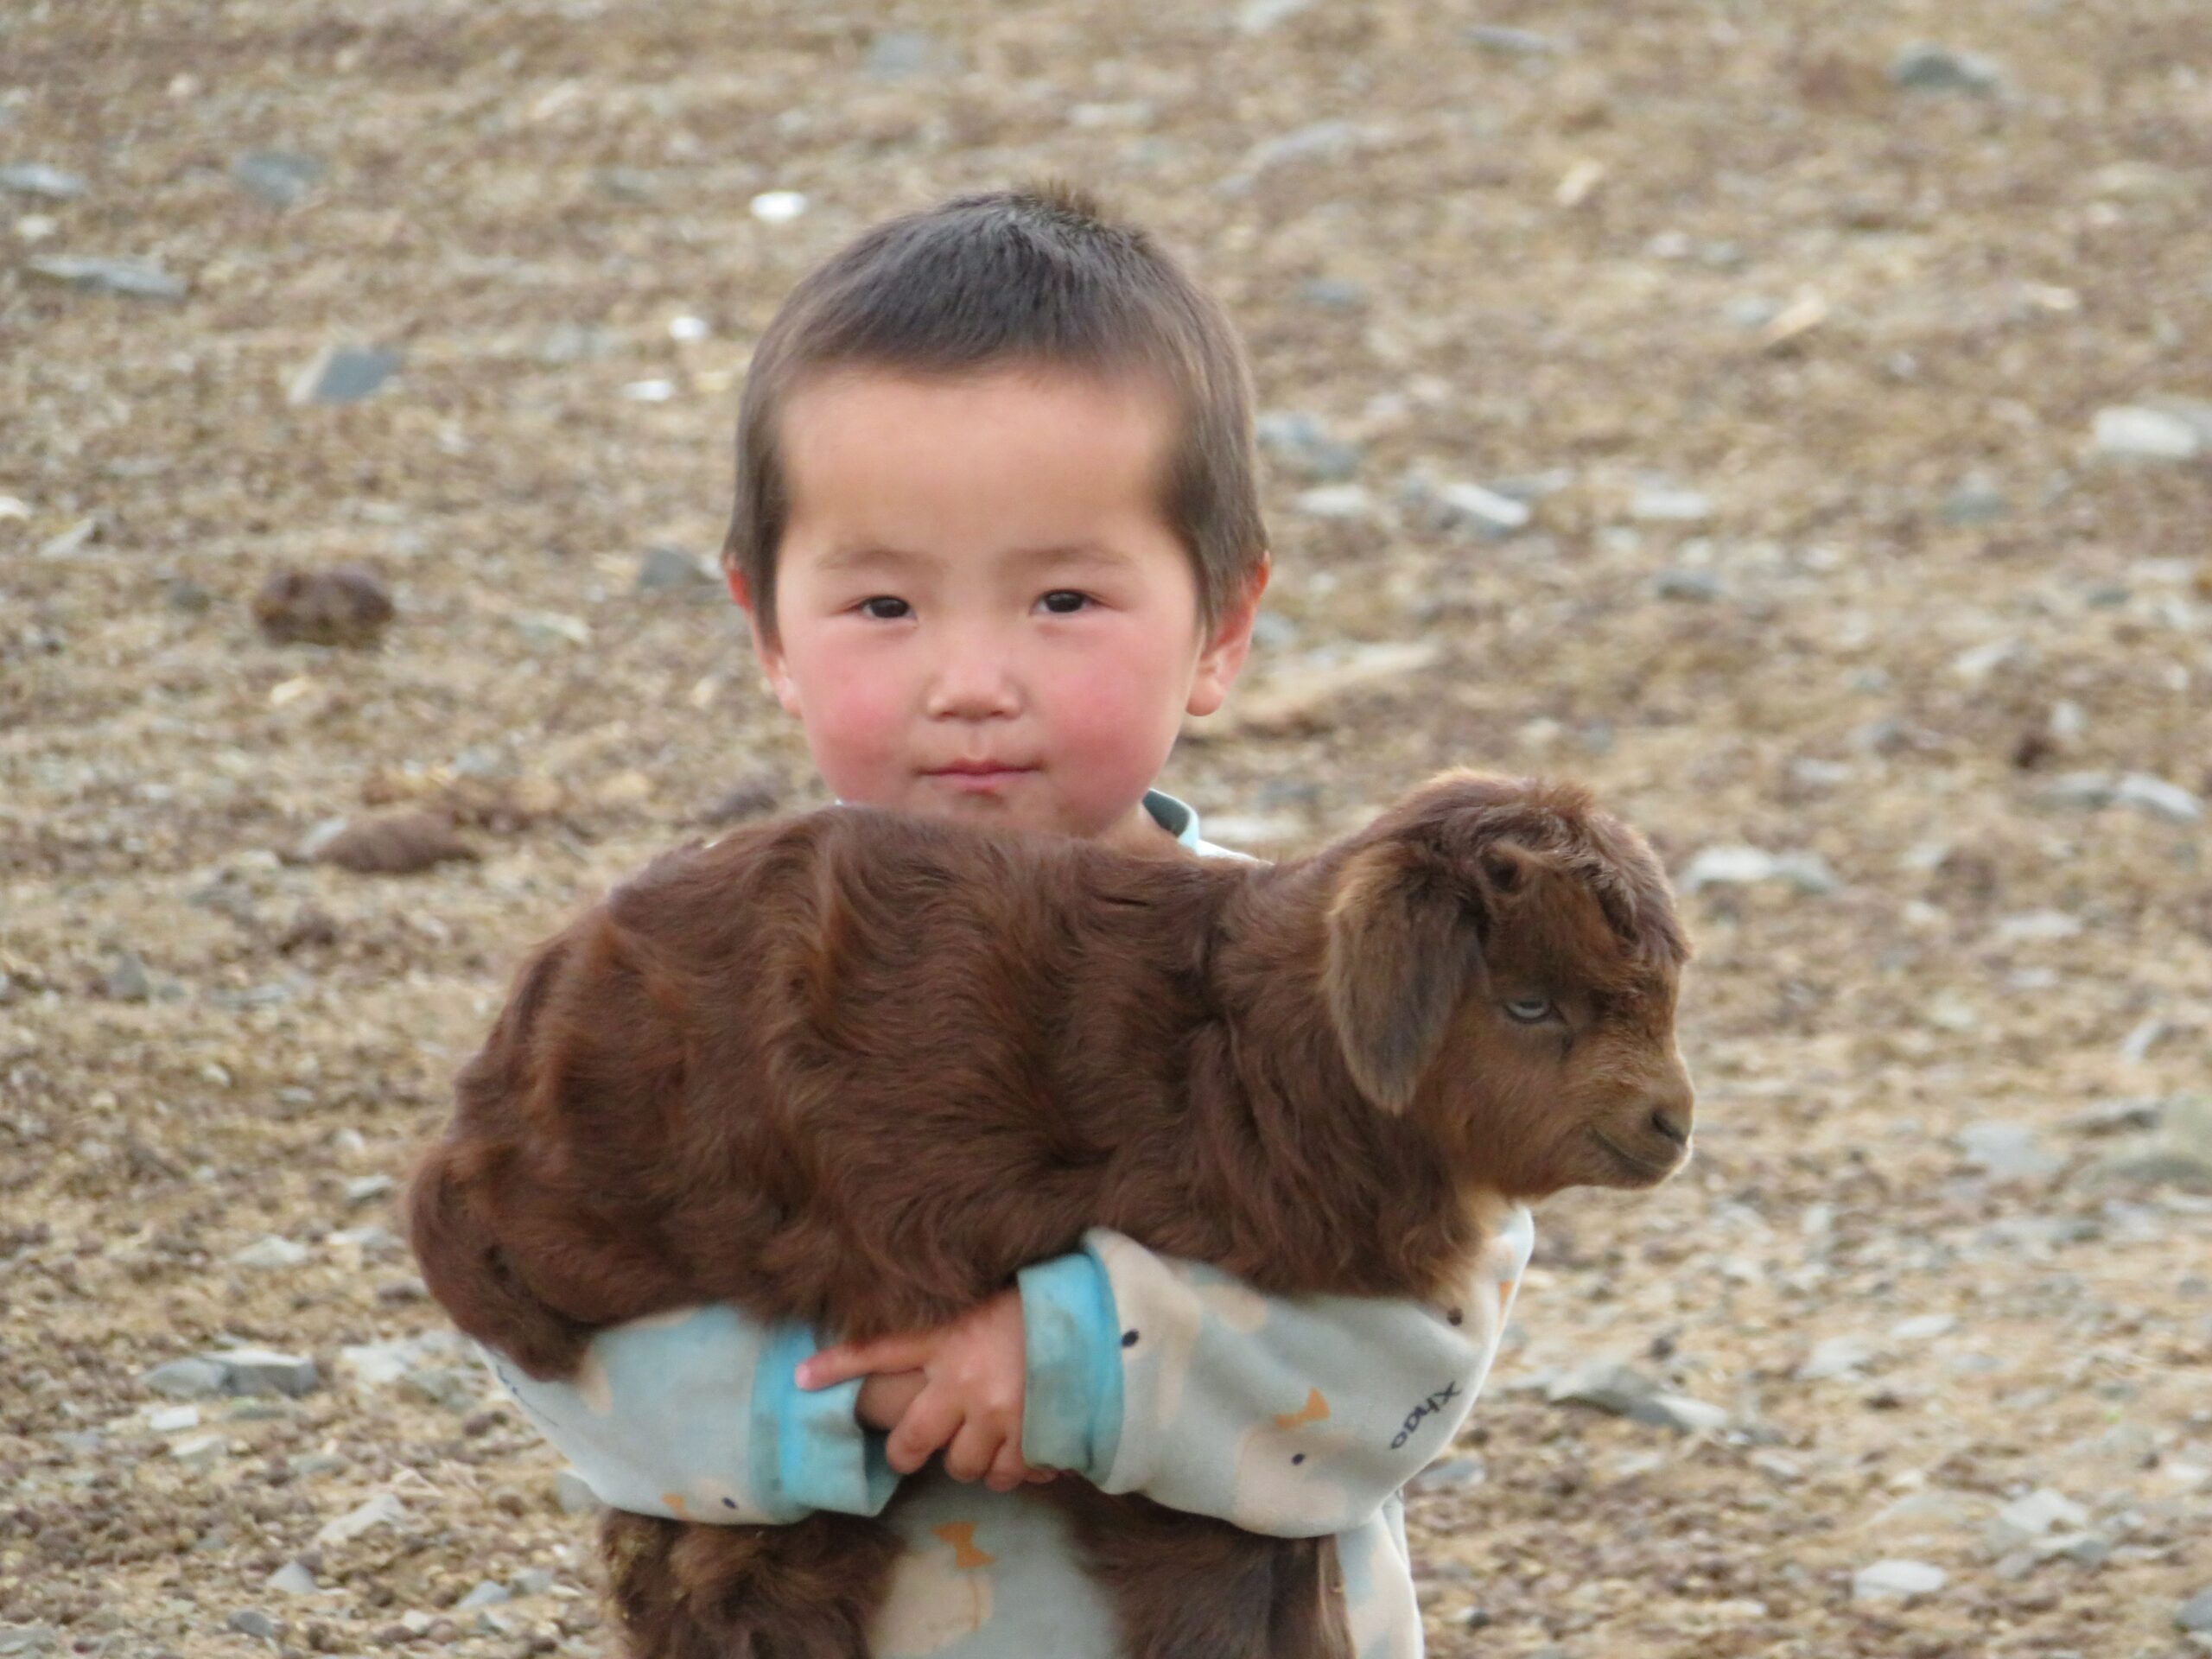 Eurasian child holding a baby animal